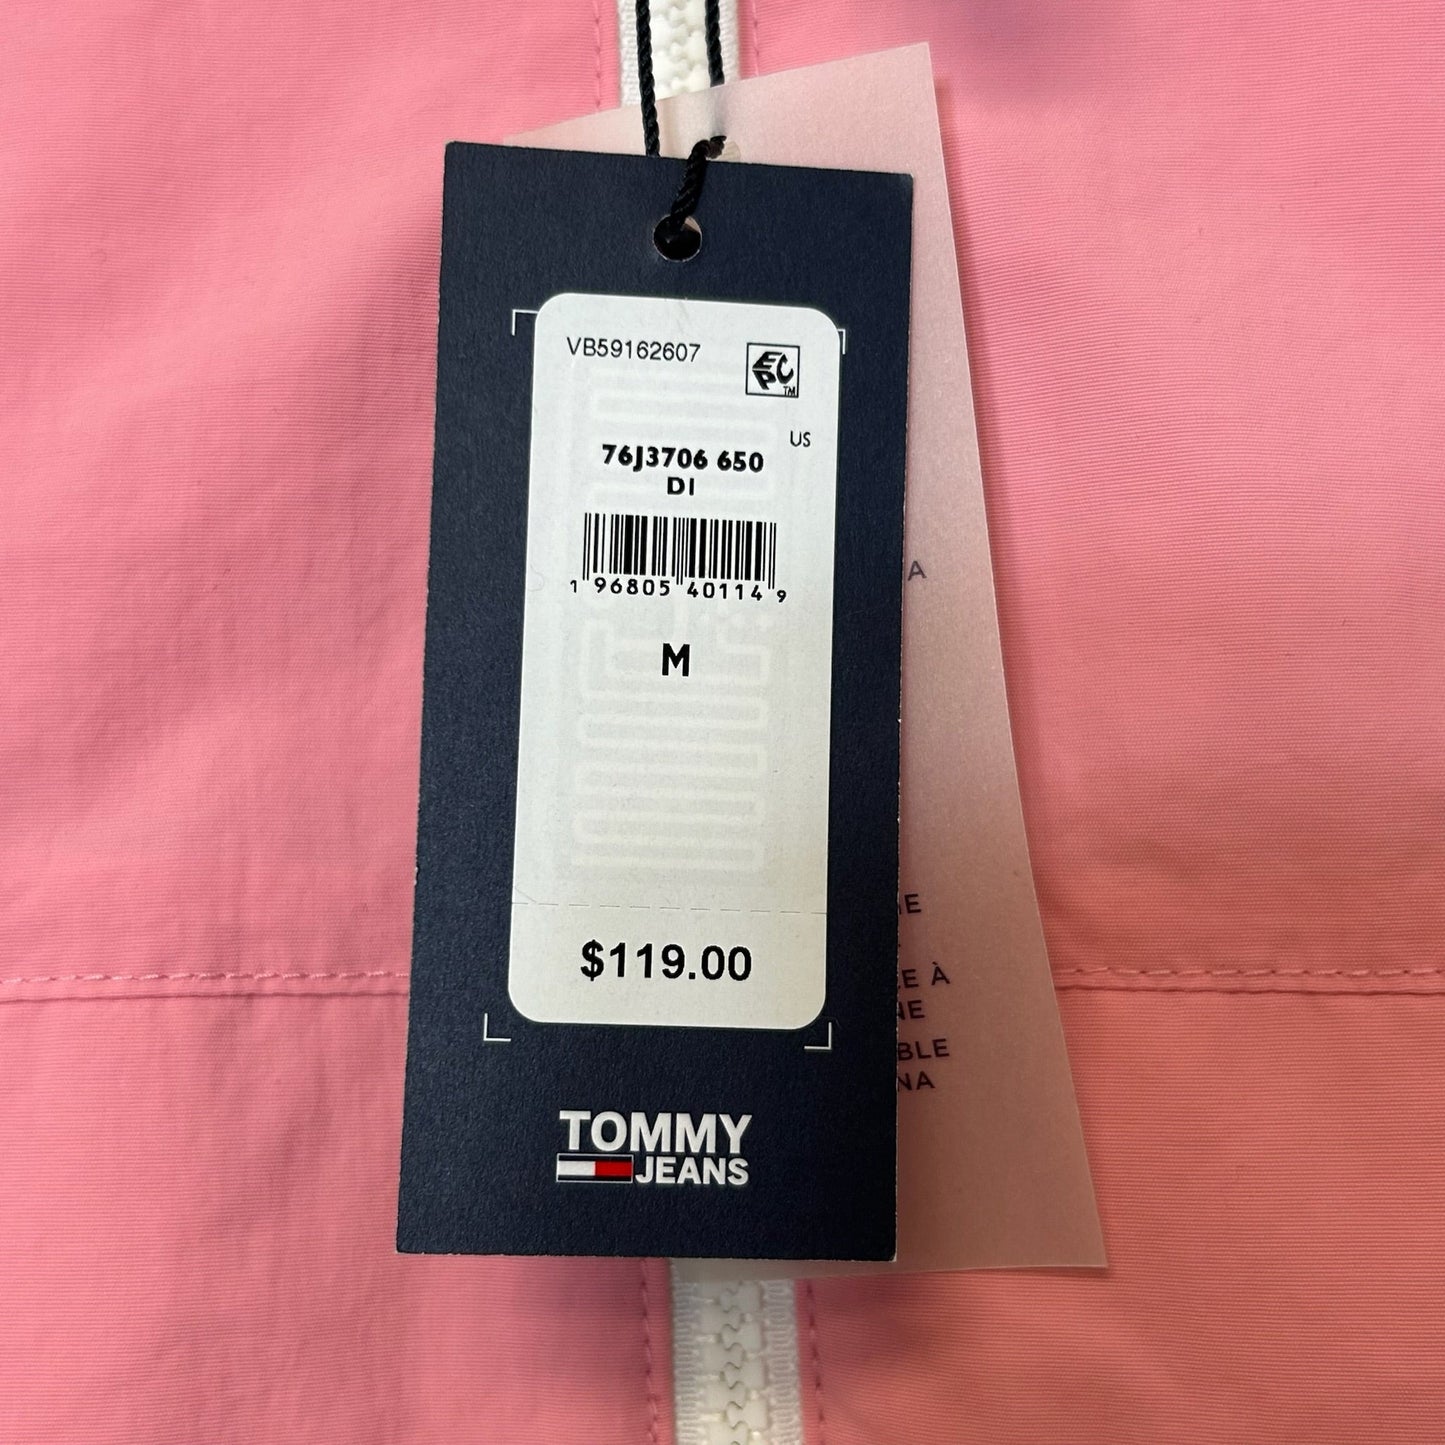 Pink Jacket Windbreaker Tommy Hilfiger O, Size M